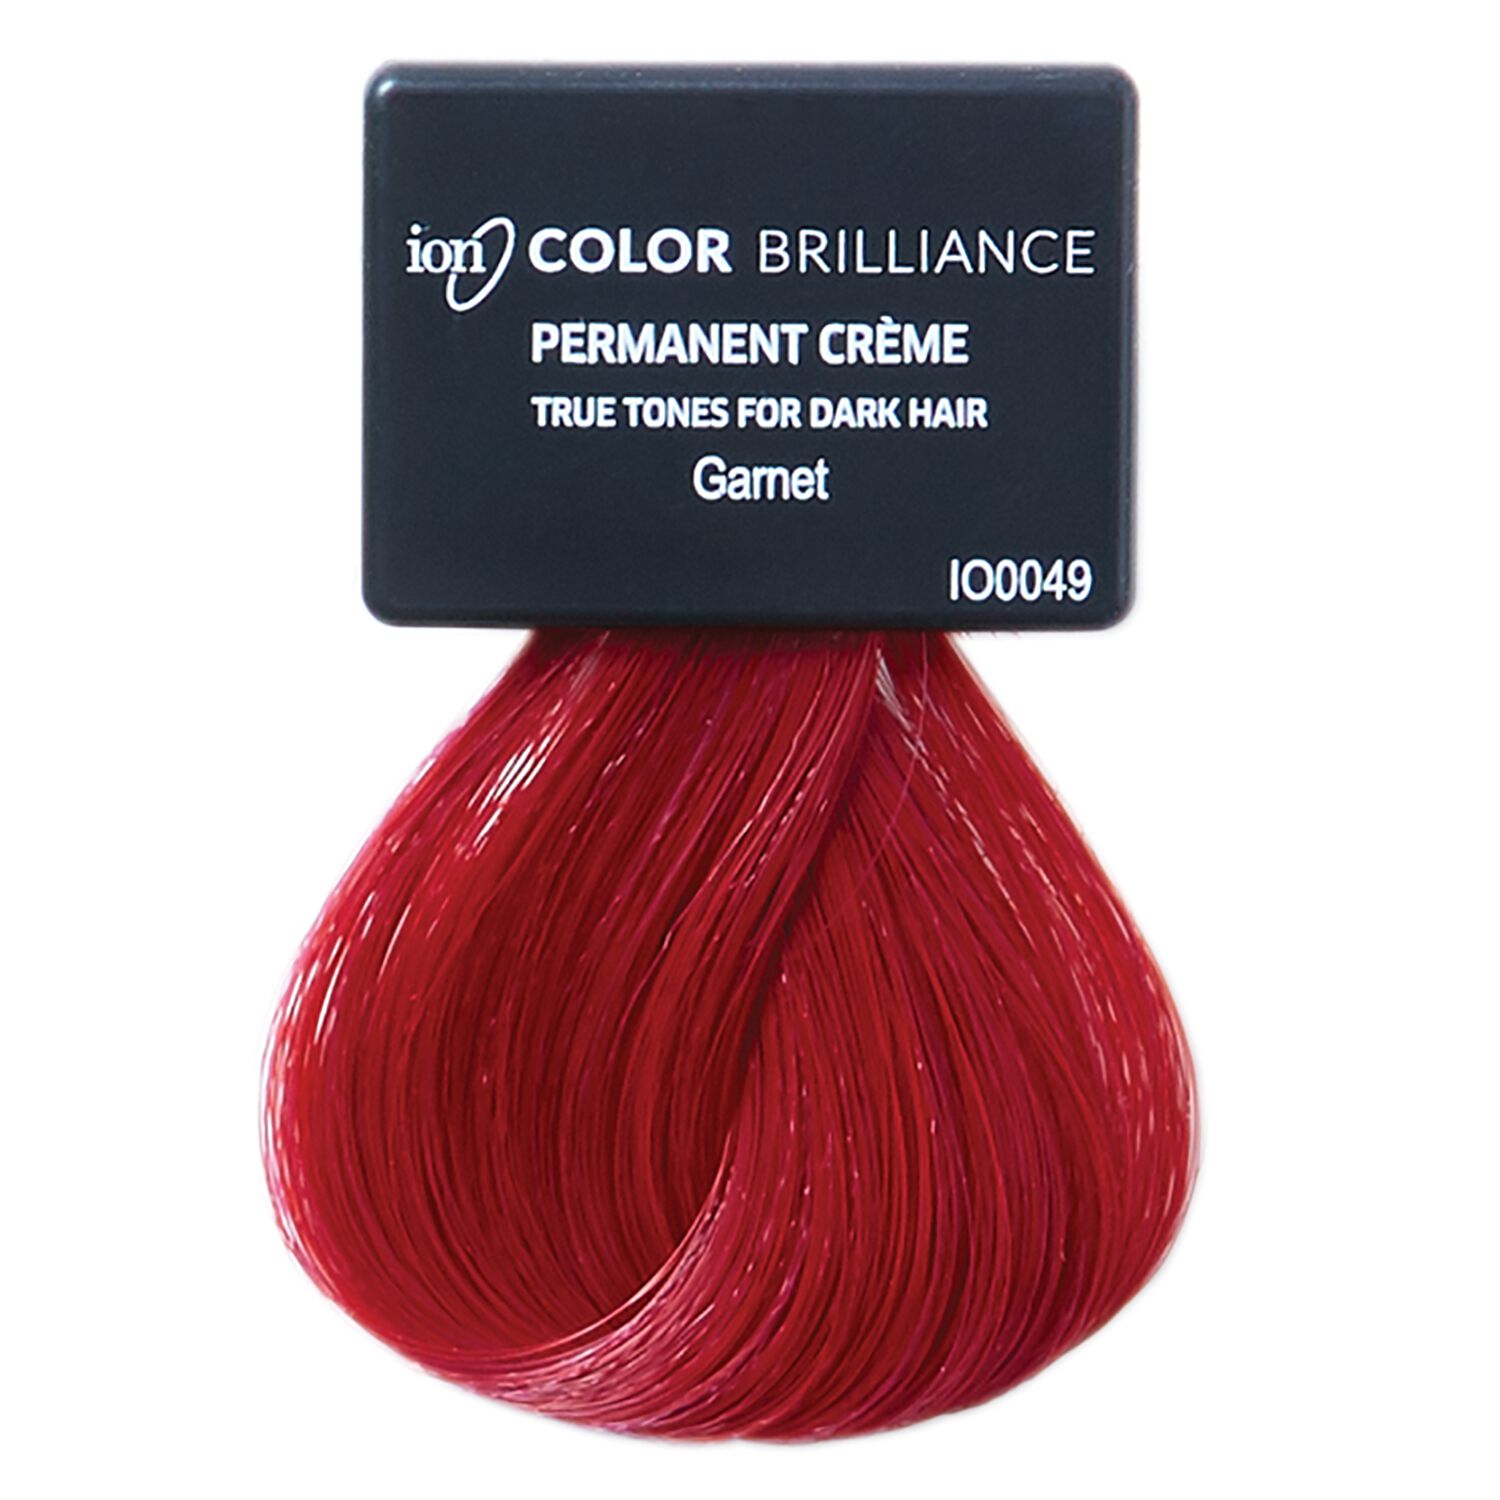 Ion True Tones for Dark Hair Permanent Crème Hair Color Garnet